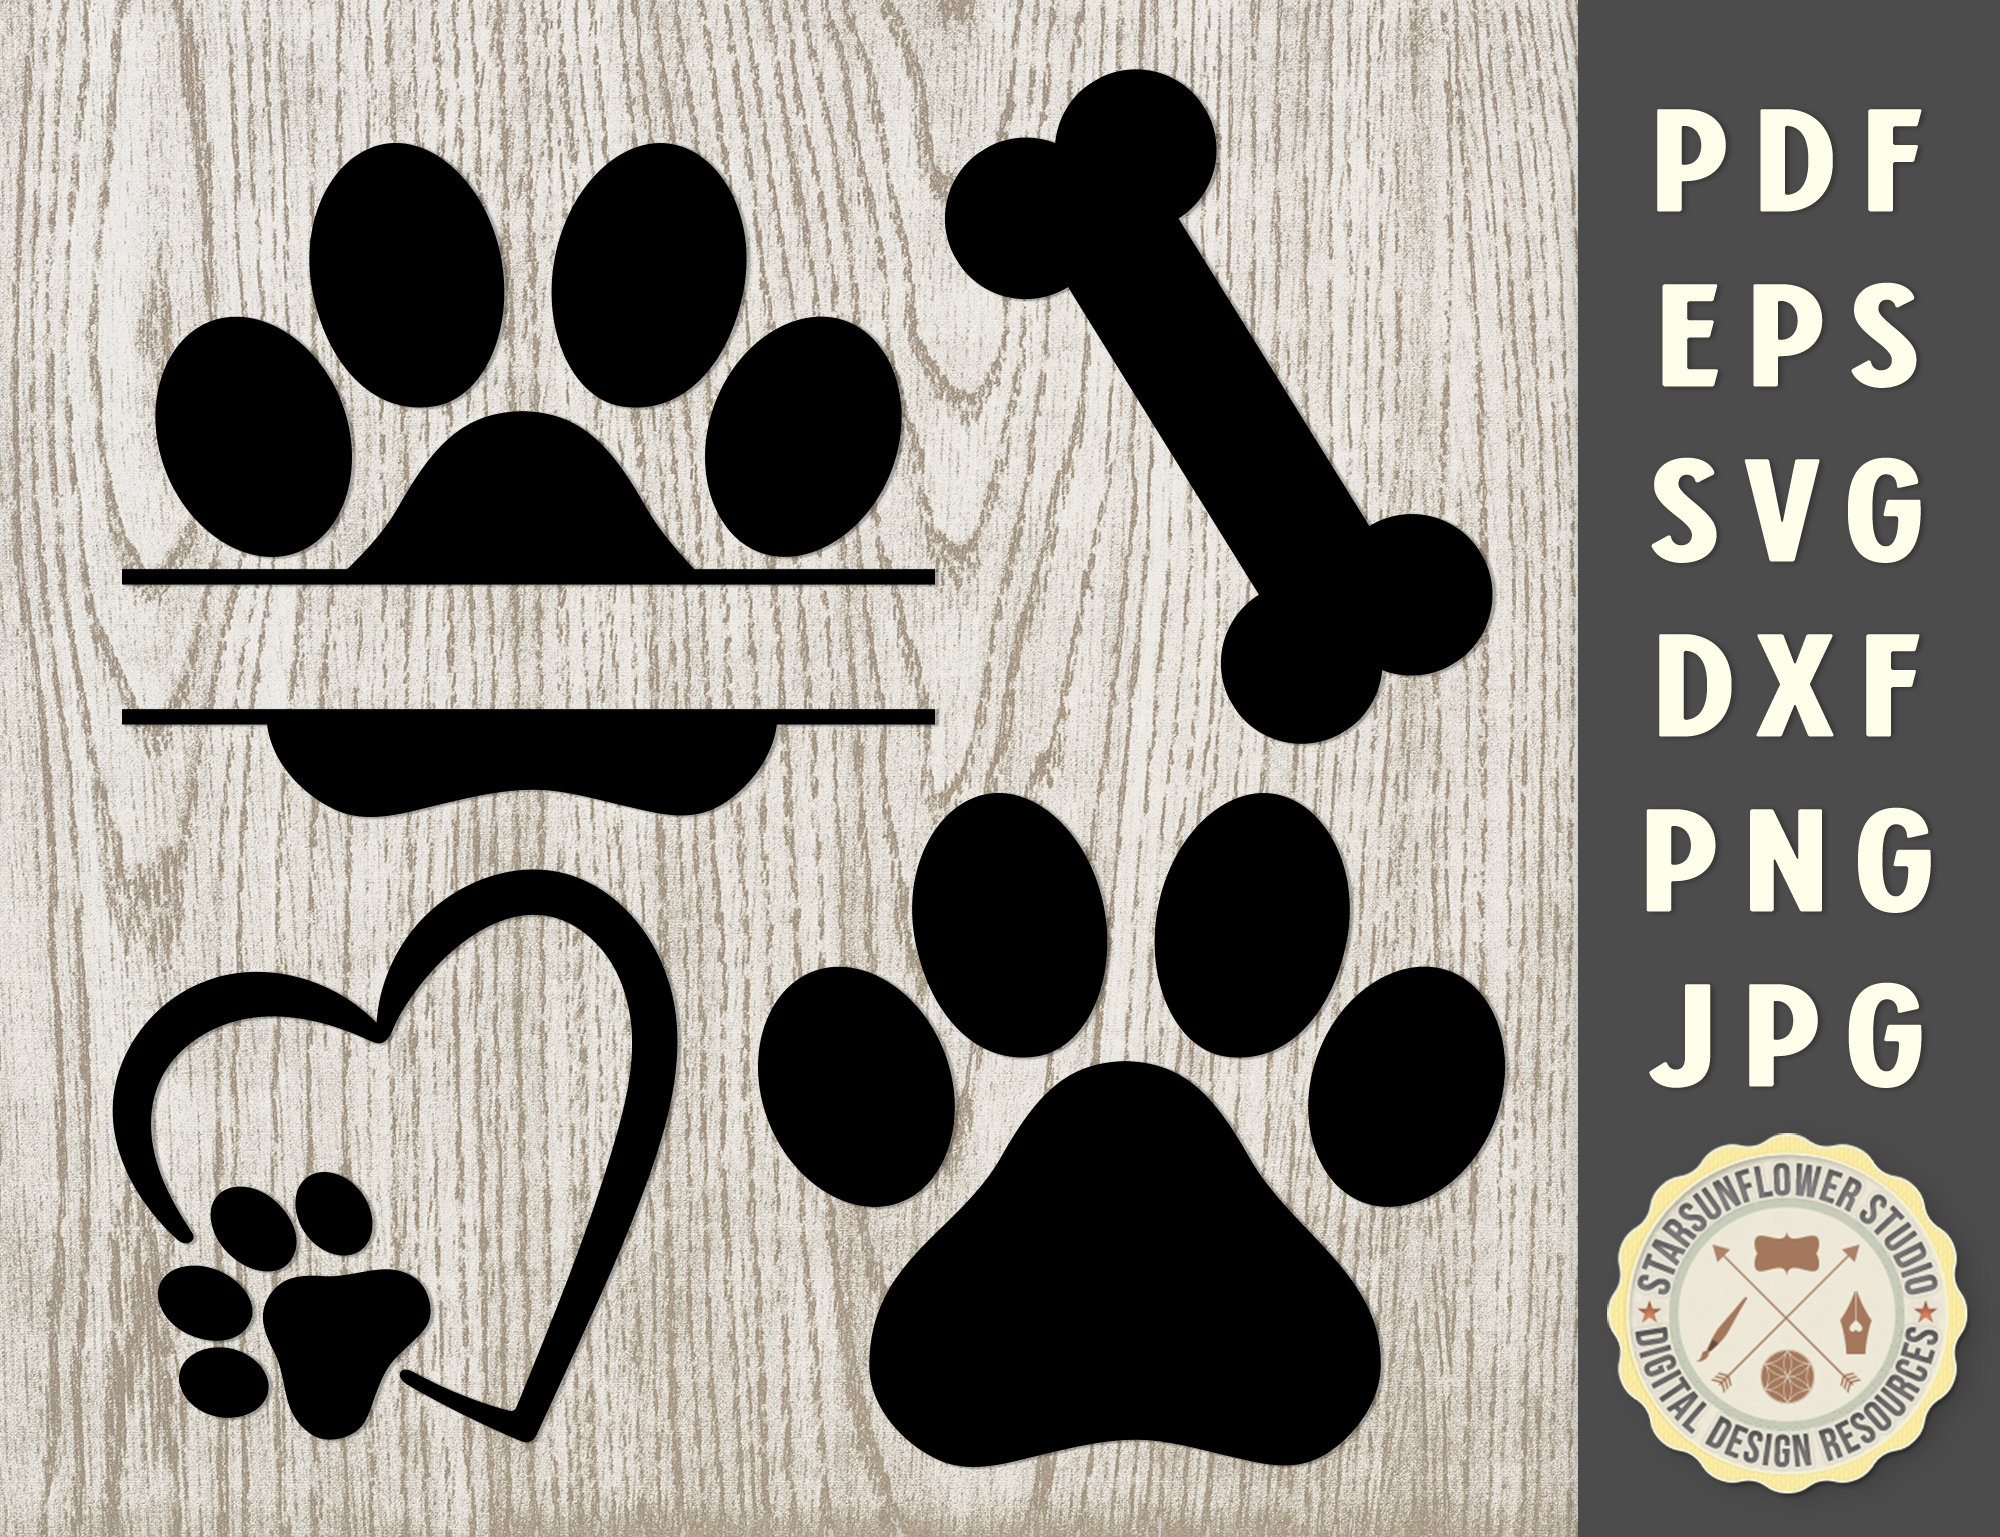 Dog Paw Bone Name Frame Silhouette dxf png Cricut svg pdf jpg Instant Digital Download Dog Paw Bone Monogram SVG ClipArt eps